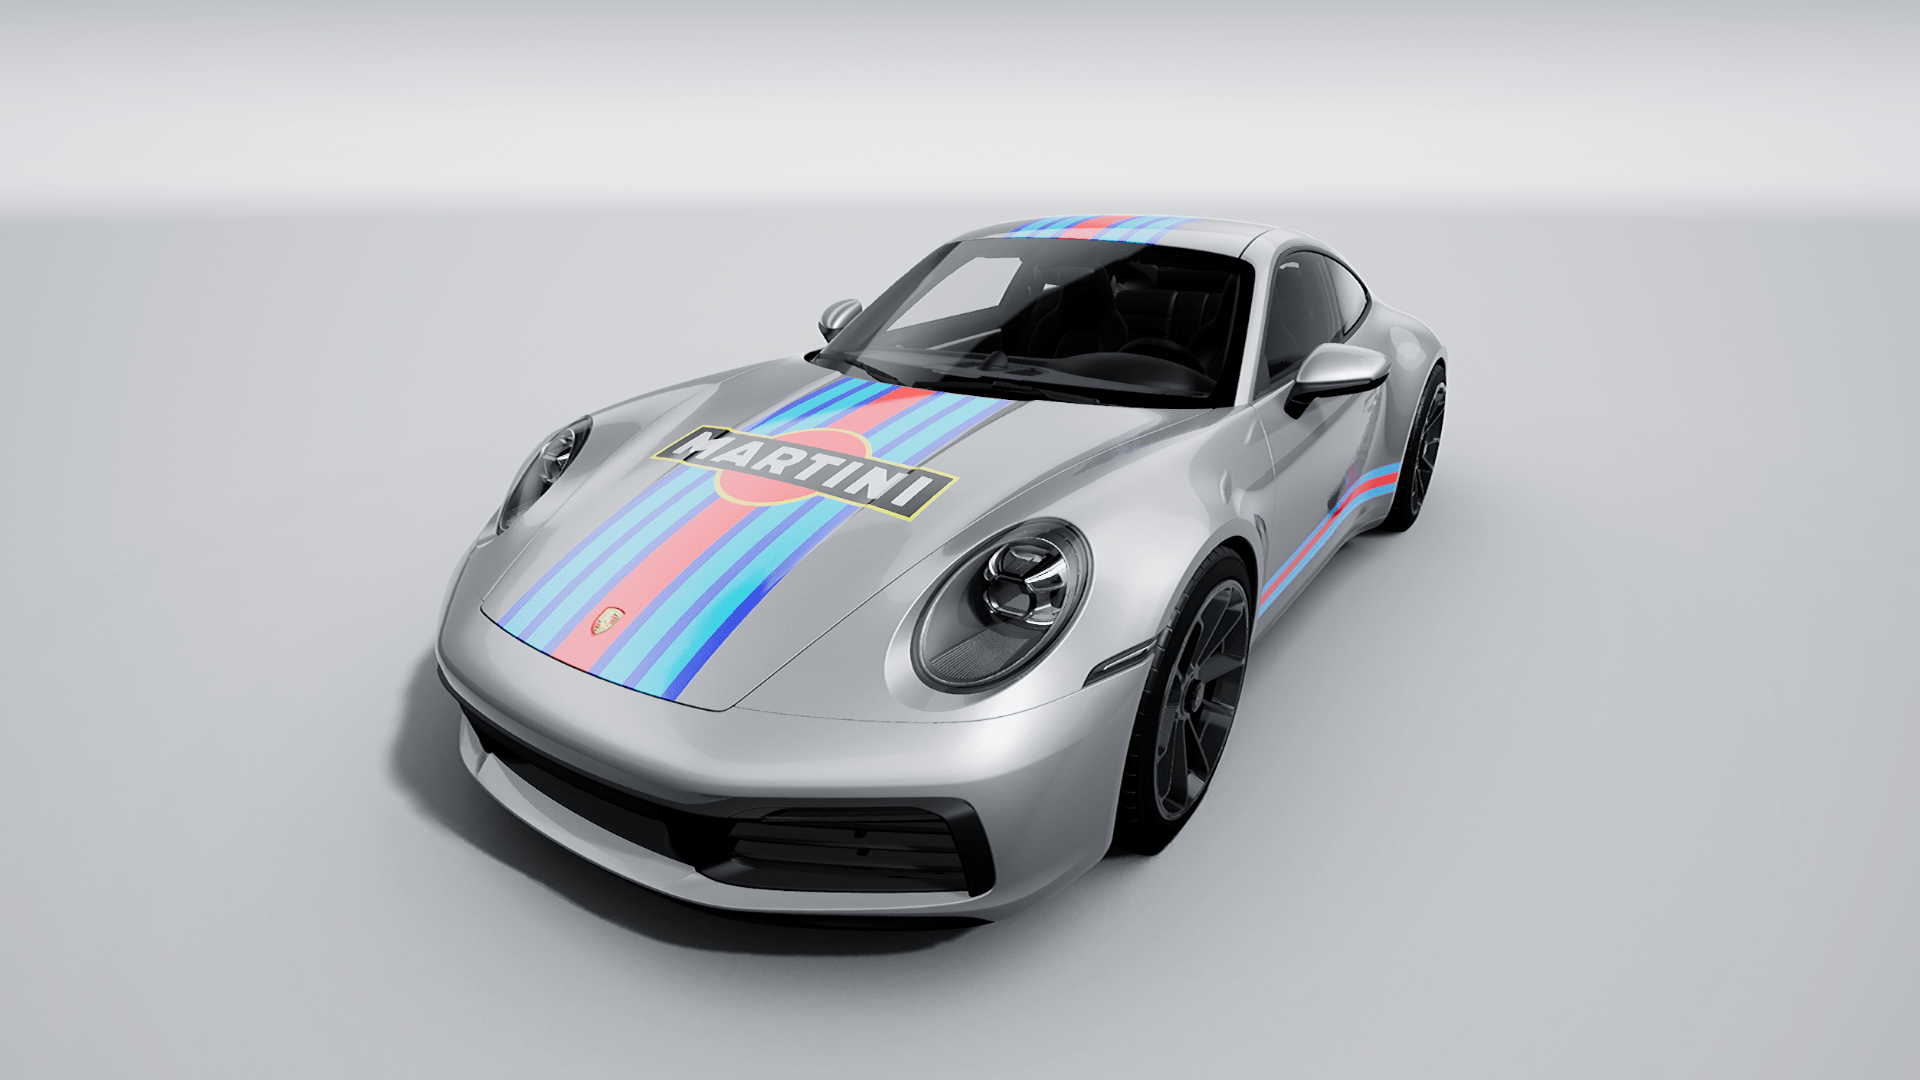 Martini Racing Returns with Porsche